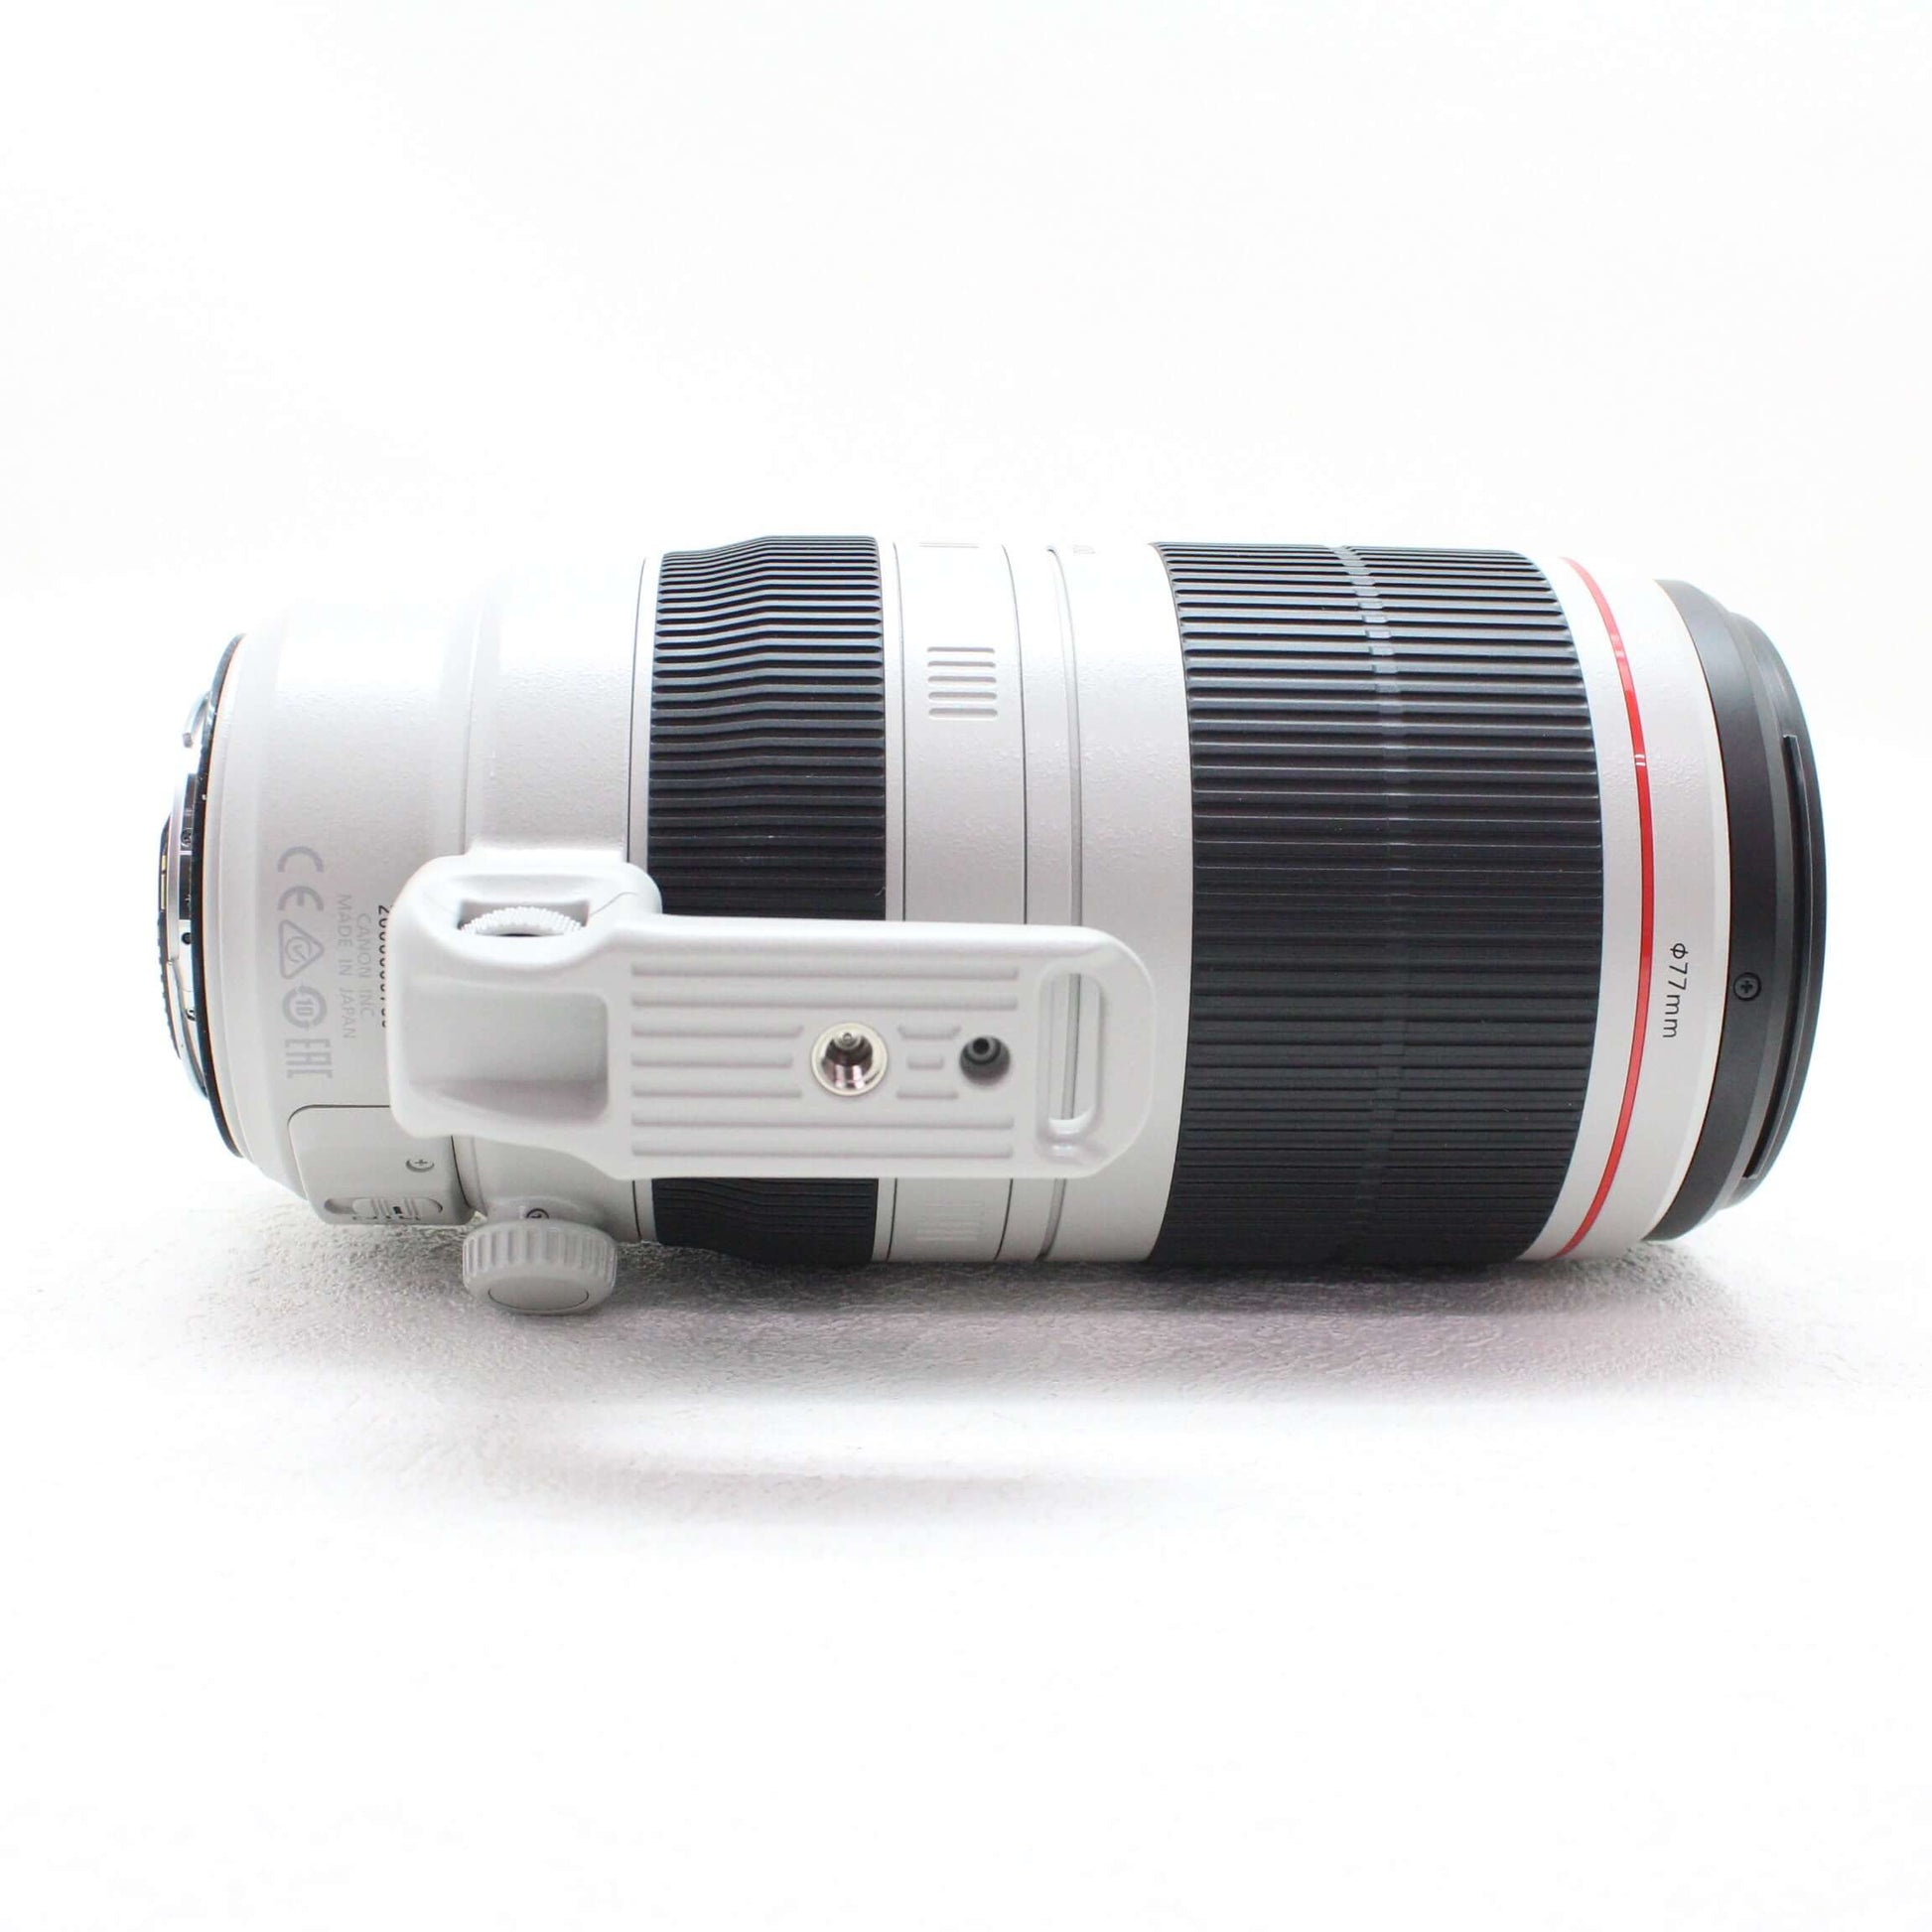 中古品 Canon EF100-400mm F4.5-5.6L IS II USM 【2月10日(土) youtube生配信でご紹介】